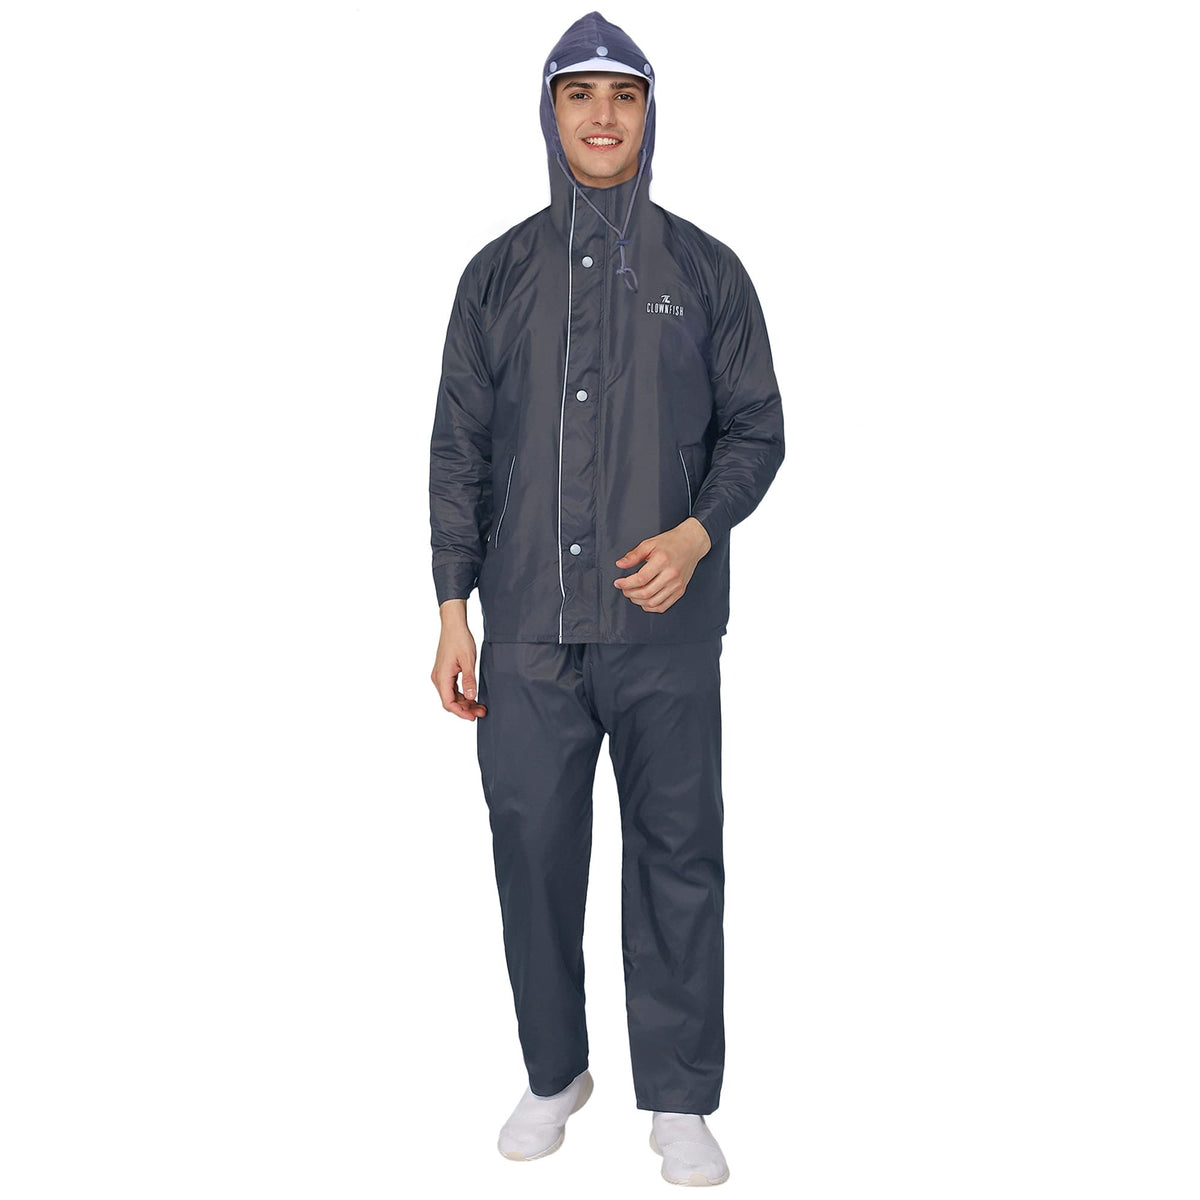 THE CLOWNFISH Viner Pro Series Reversible Waterproof Double Layer Men's Raincoat (Grey, L-Size)